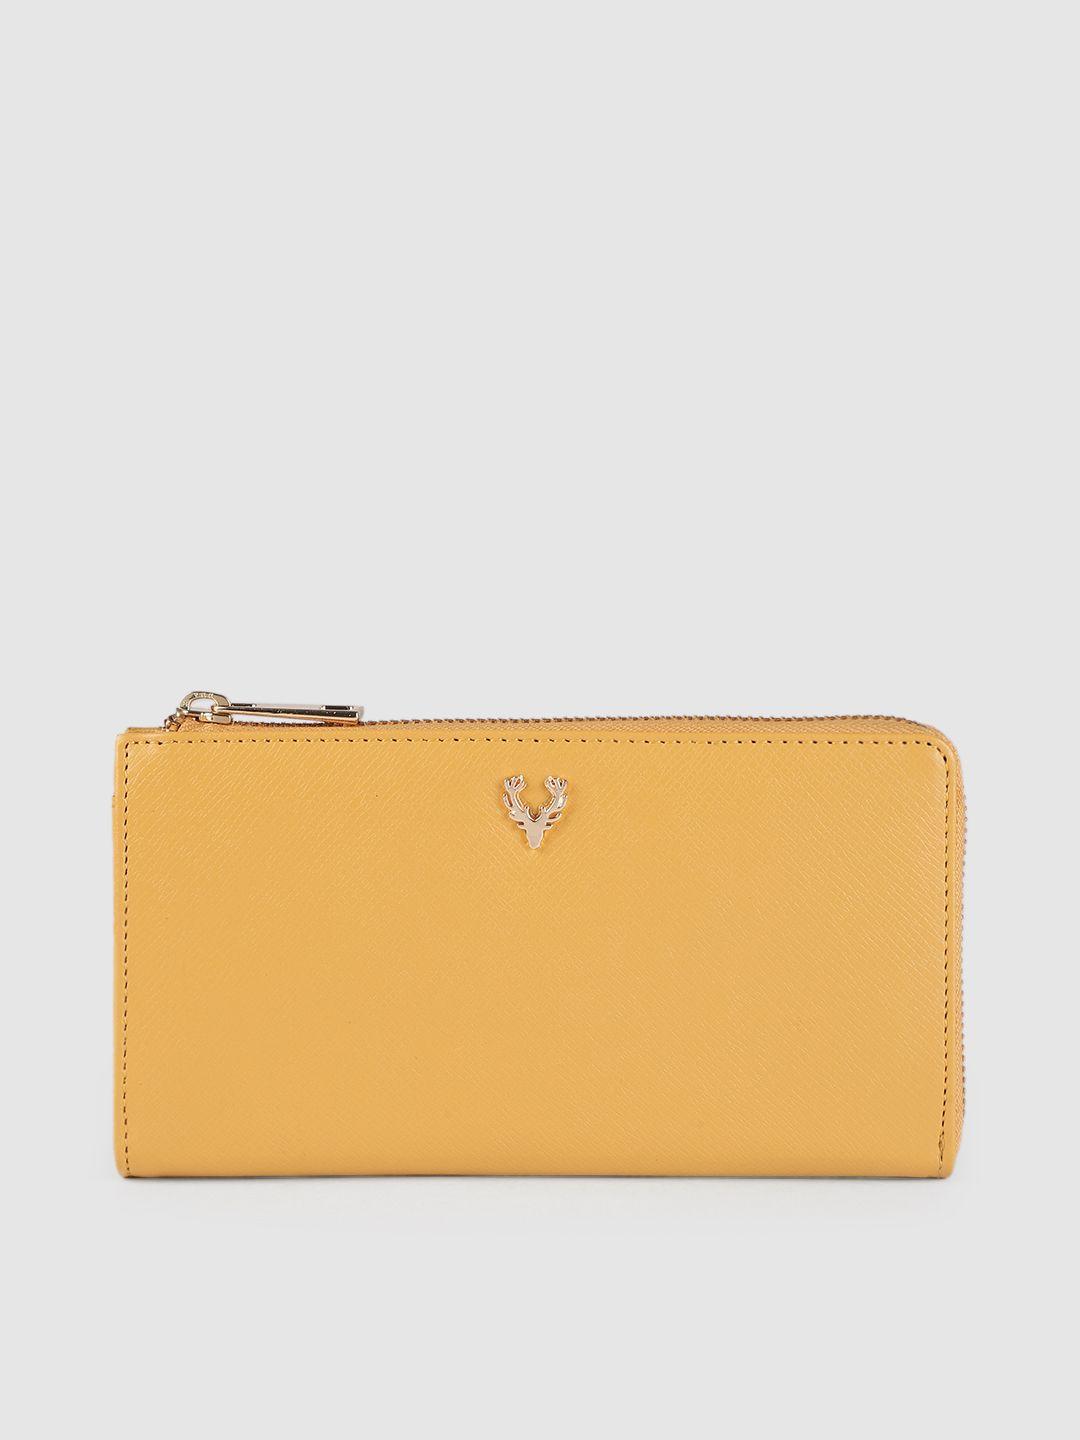 allen solly women mustard yellow textured zip around wallet